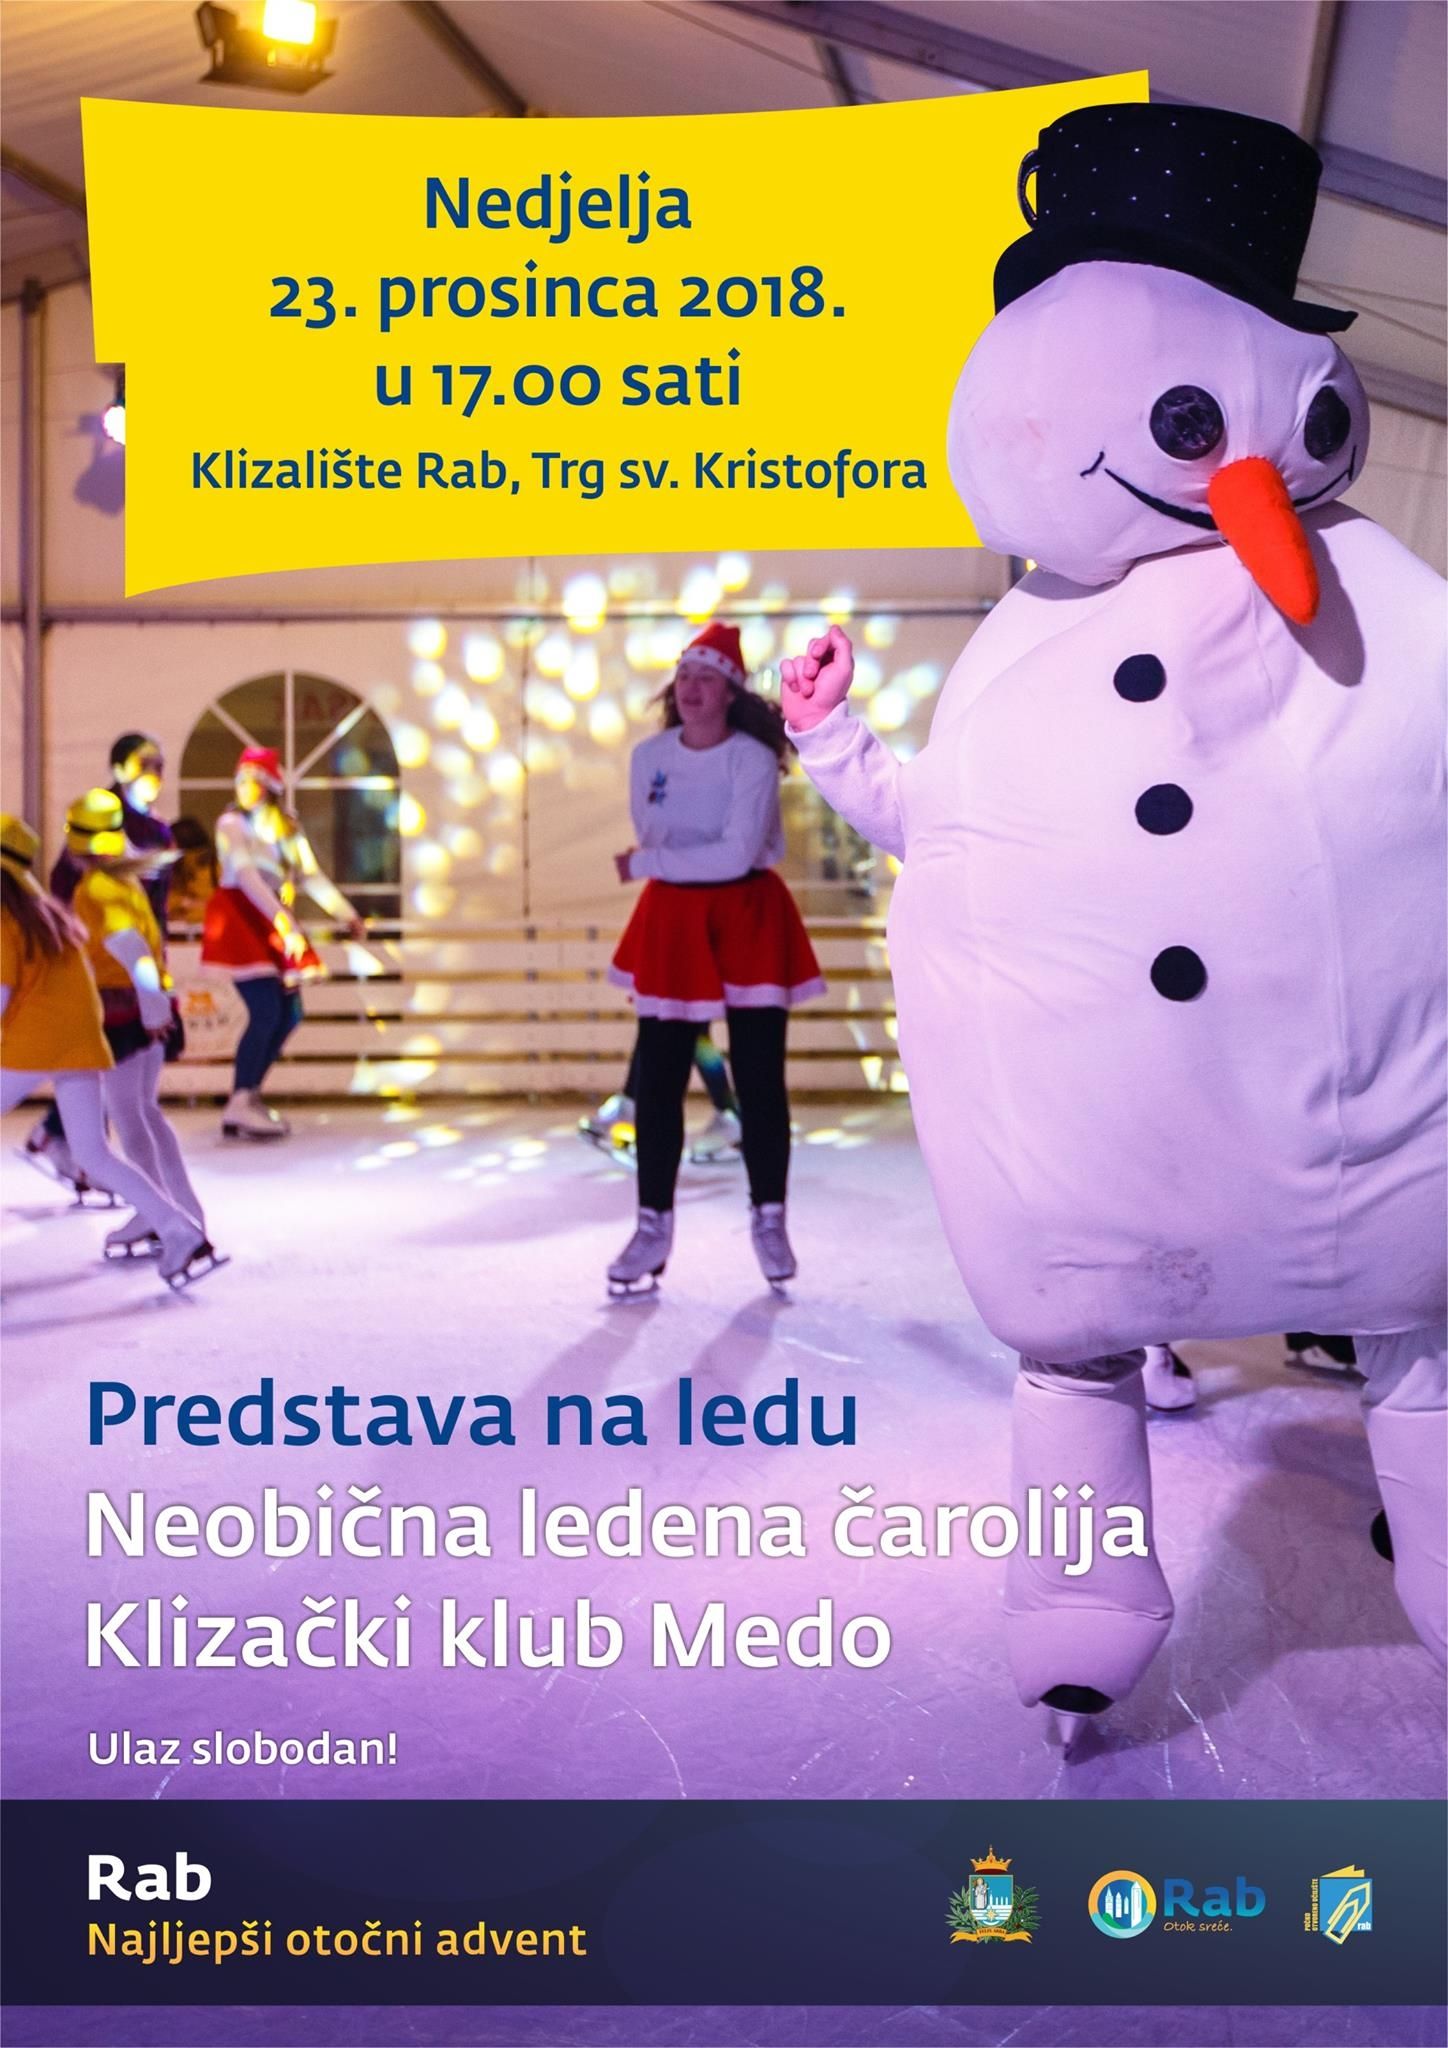 Predstava na ledu “Neobična ledena čarolija” Klizačkog kluba Medo / (ned.) 23.12. u 17.00h